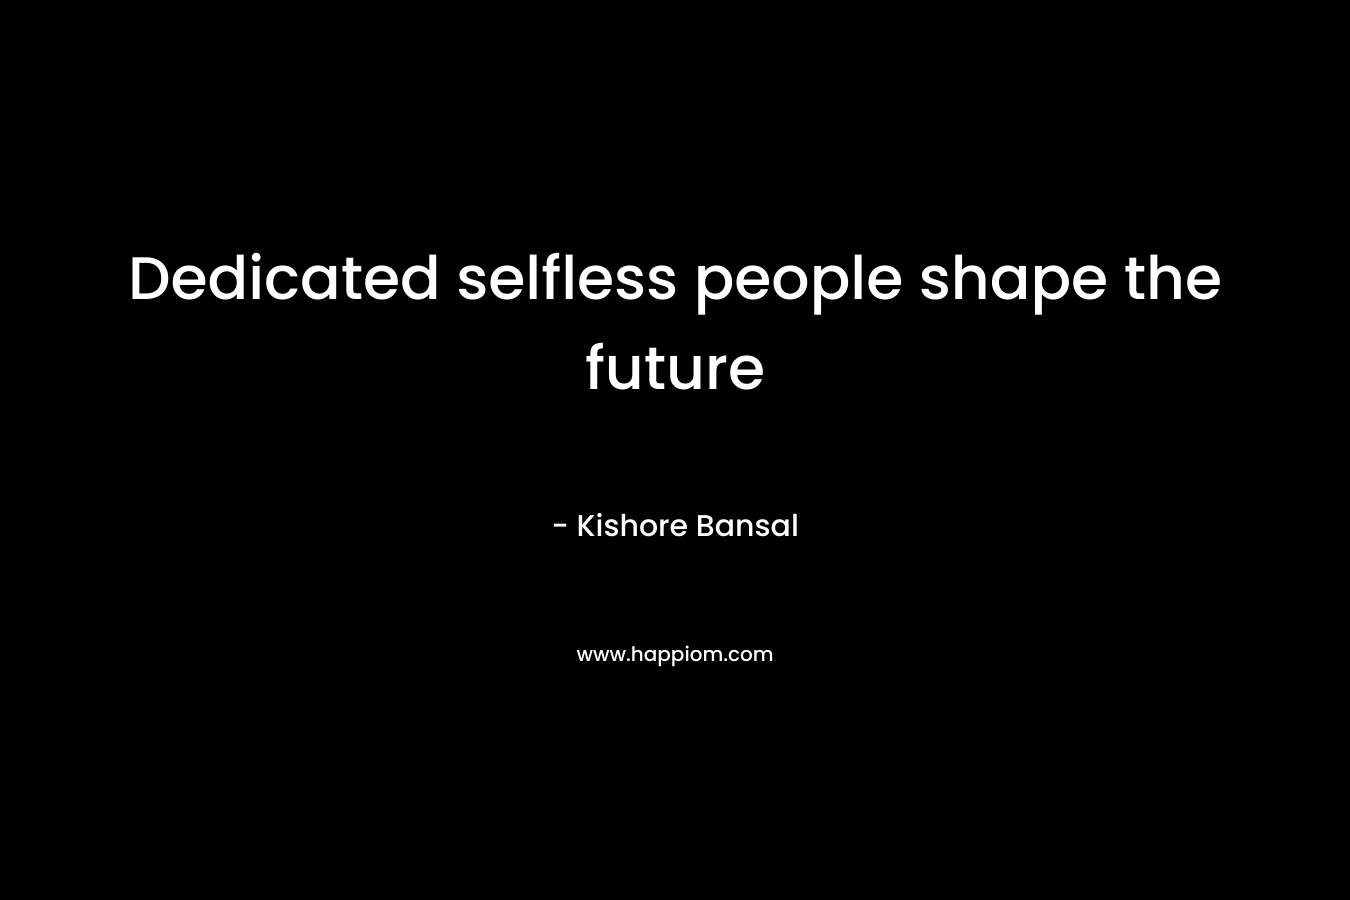 Dedicated selfless people shape the future